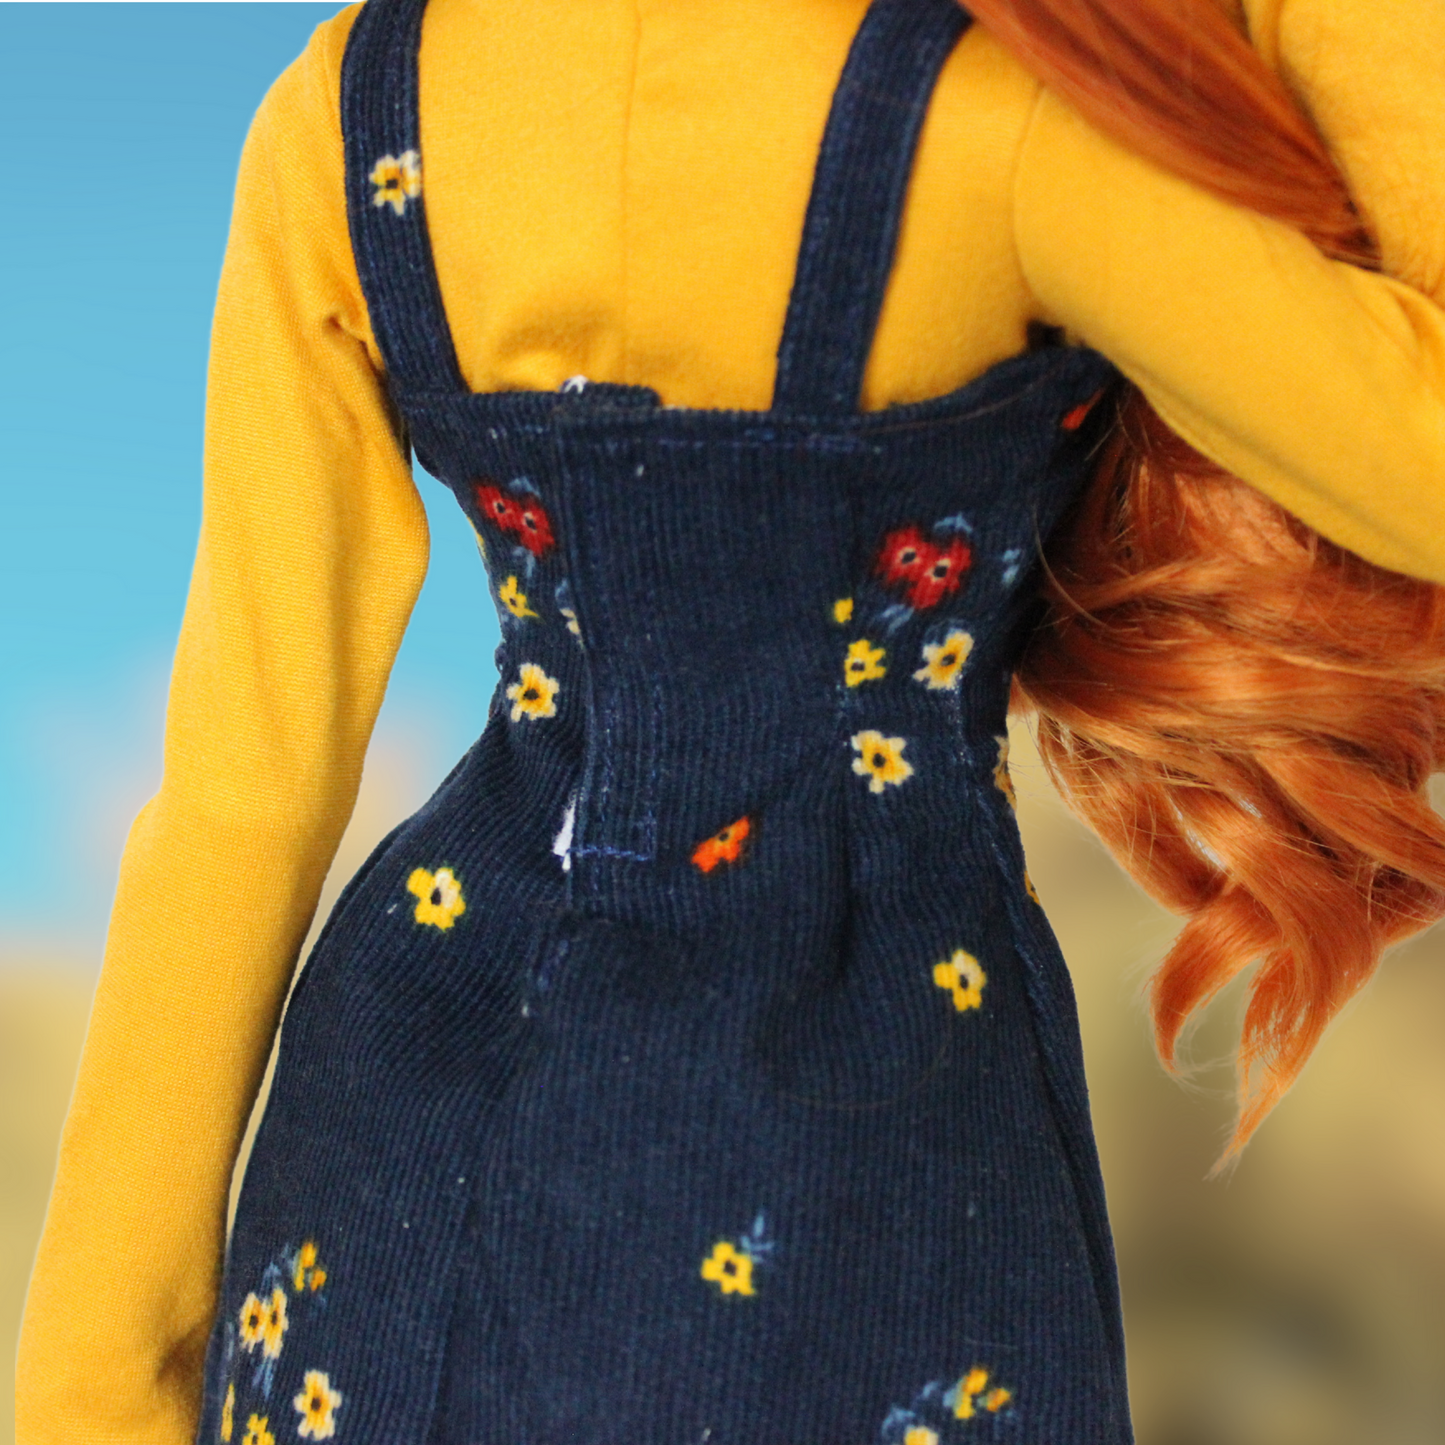 Autumn Floral Jumper Dress and Turtleneck Set for Smart Dolls - The Doll Fairy